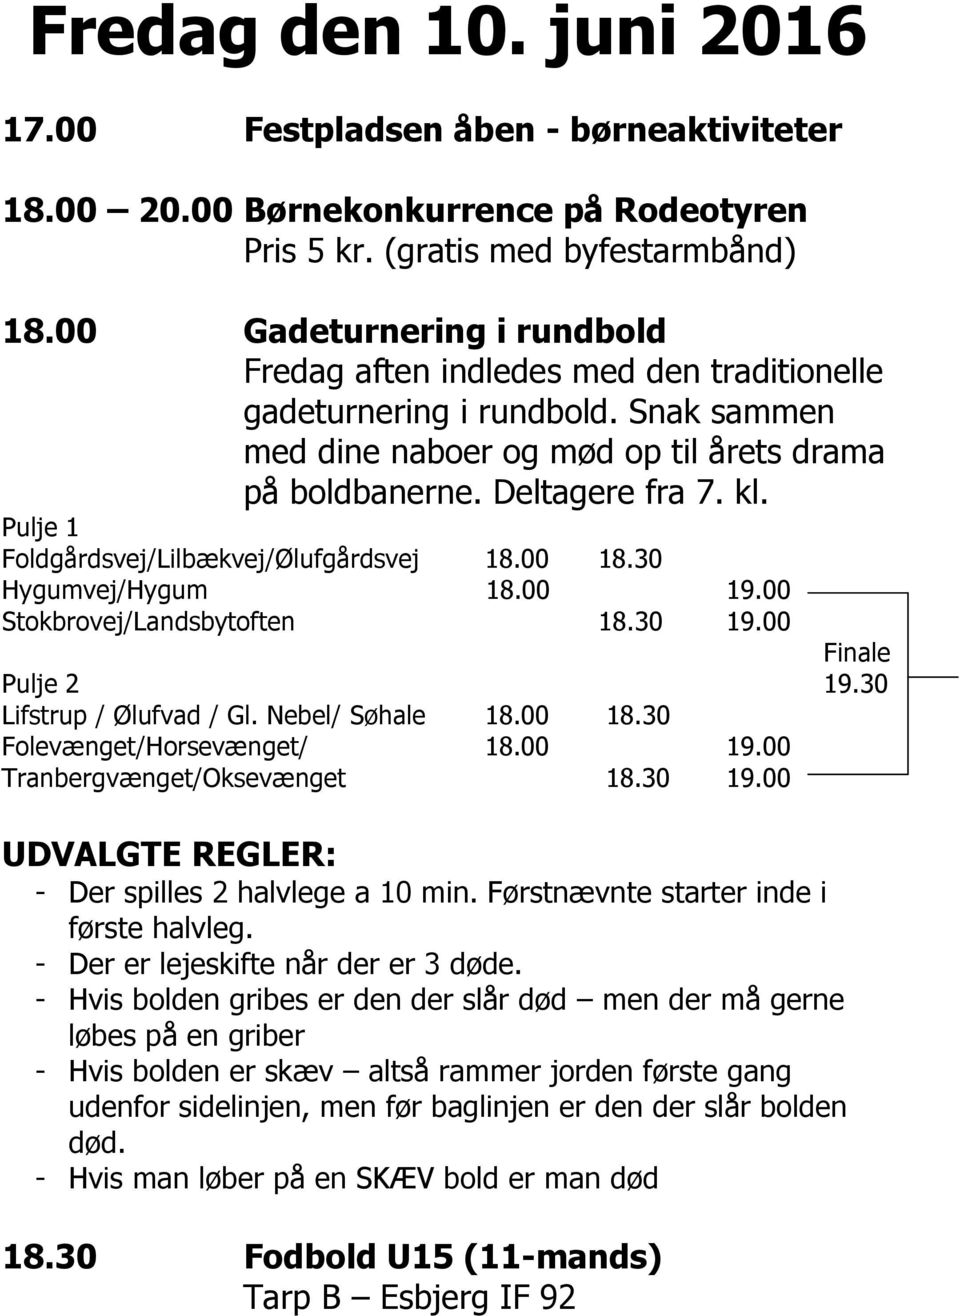 Pulje 1 Foldgårdsvej/Lilbækvej/Ølufgårdsvej 18.00 18.30 Hygumvej/Hygum 18.00 19.00 Stokbrovej/Landsbytoften 18.30 19.00 Finale Pulje 2 19.30 Lifstrup / Ølufvad / Gl. Nebel/ Søhale 18.00 18.30 Folevænget/Horsevænget/ 18.